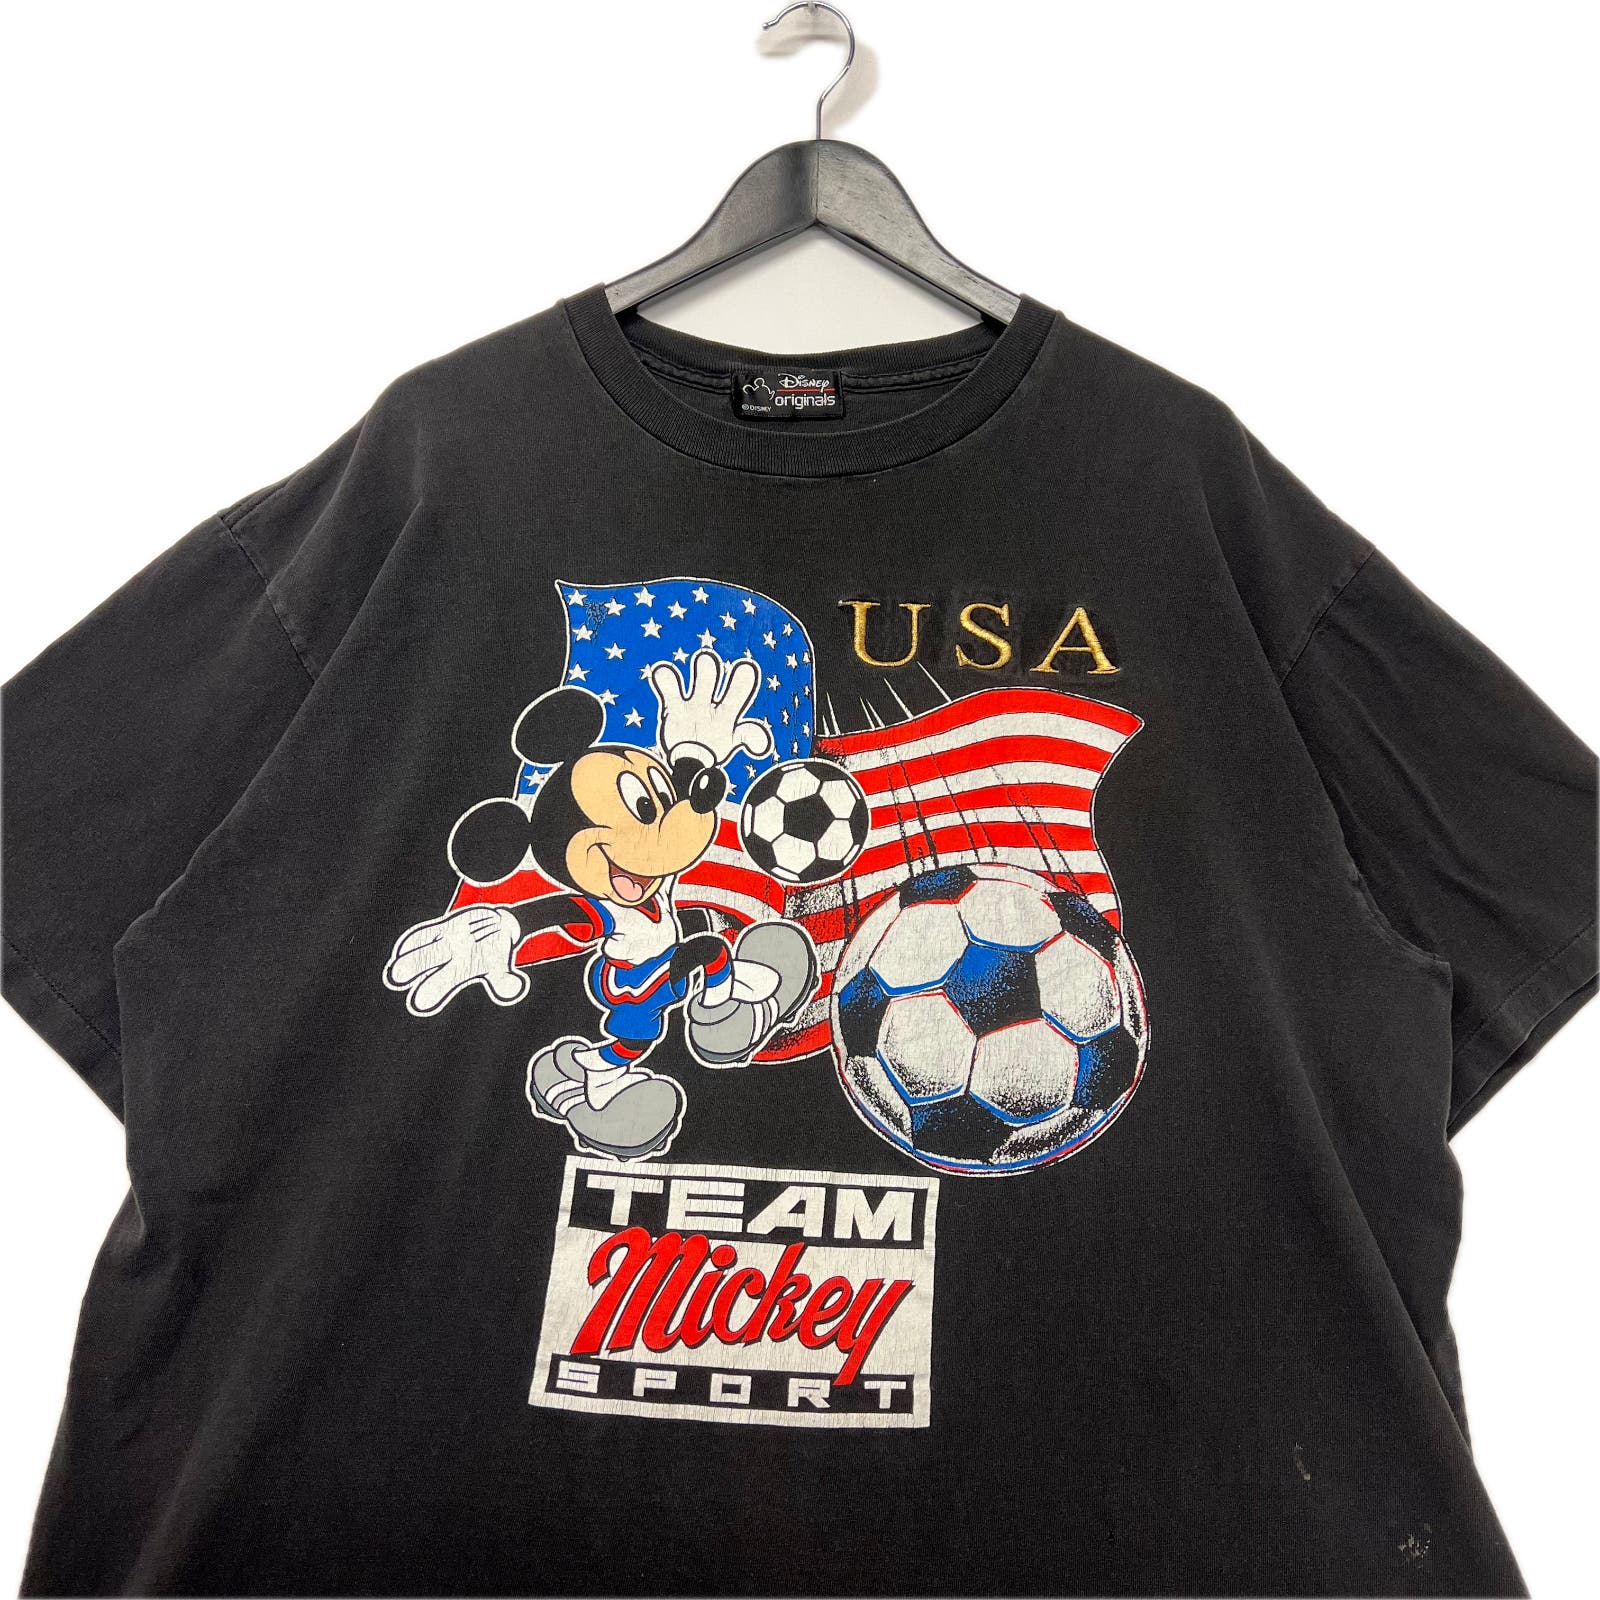 Vintage 90s Team Mickey Mouse USA Flag Soccer Sport Black T-Shirt Size XL